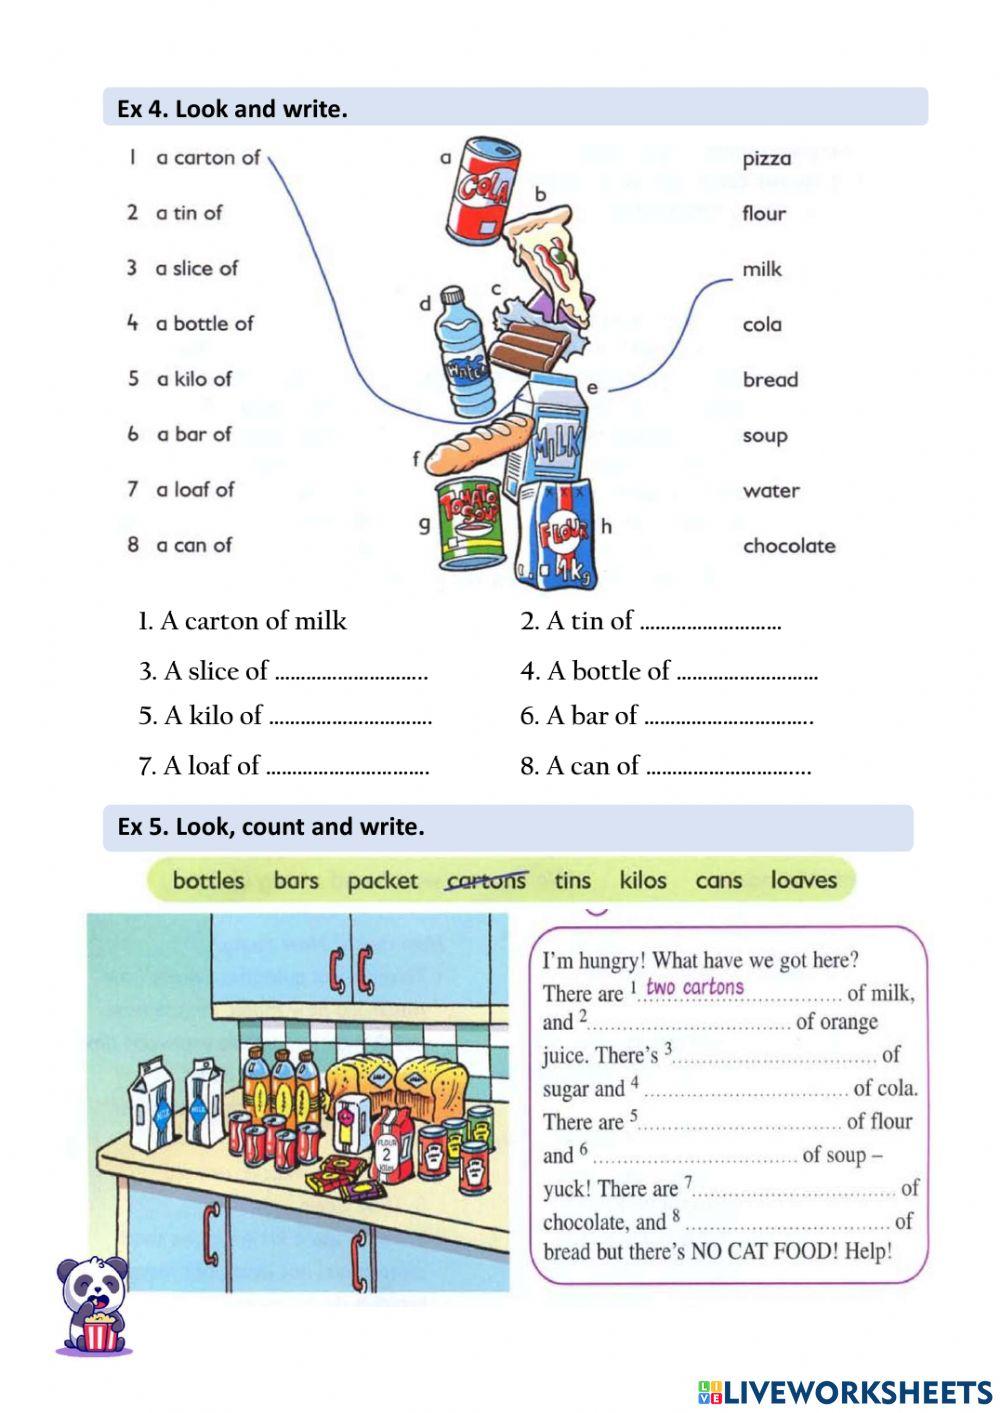 Grammar Test 3 (Unit 14-16)